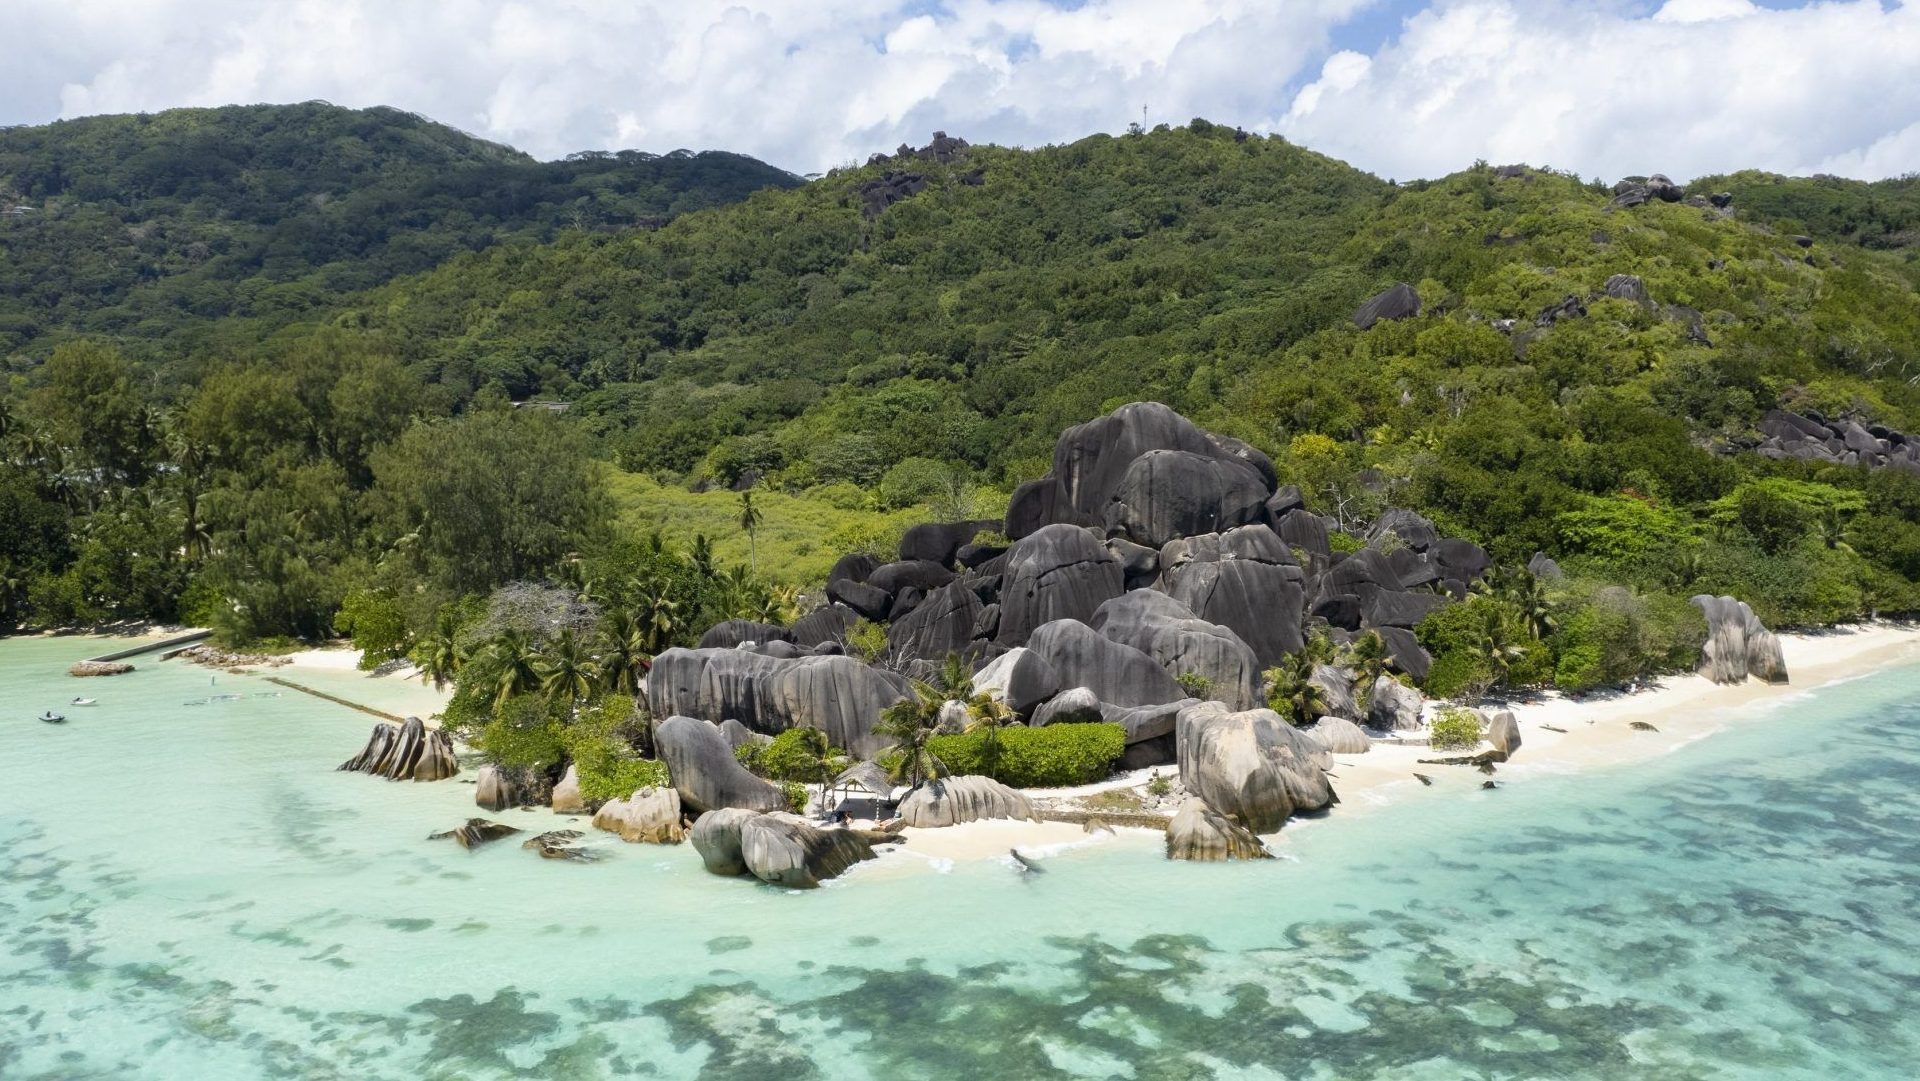 Seychelles Islands: The Perfect Romantic Getaway